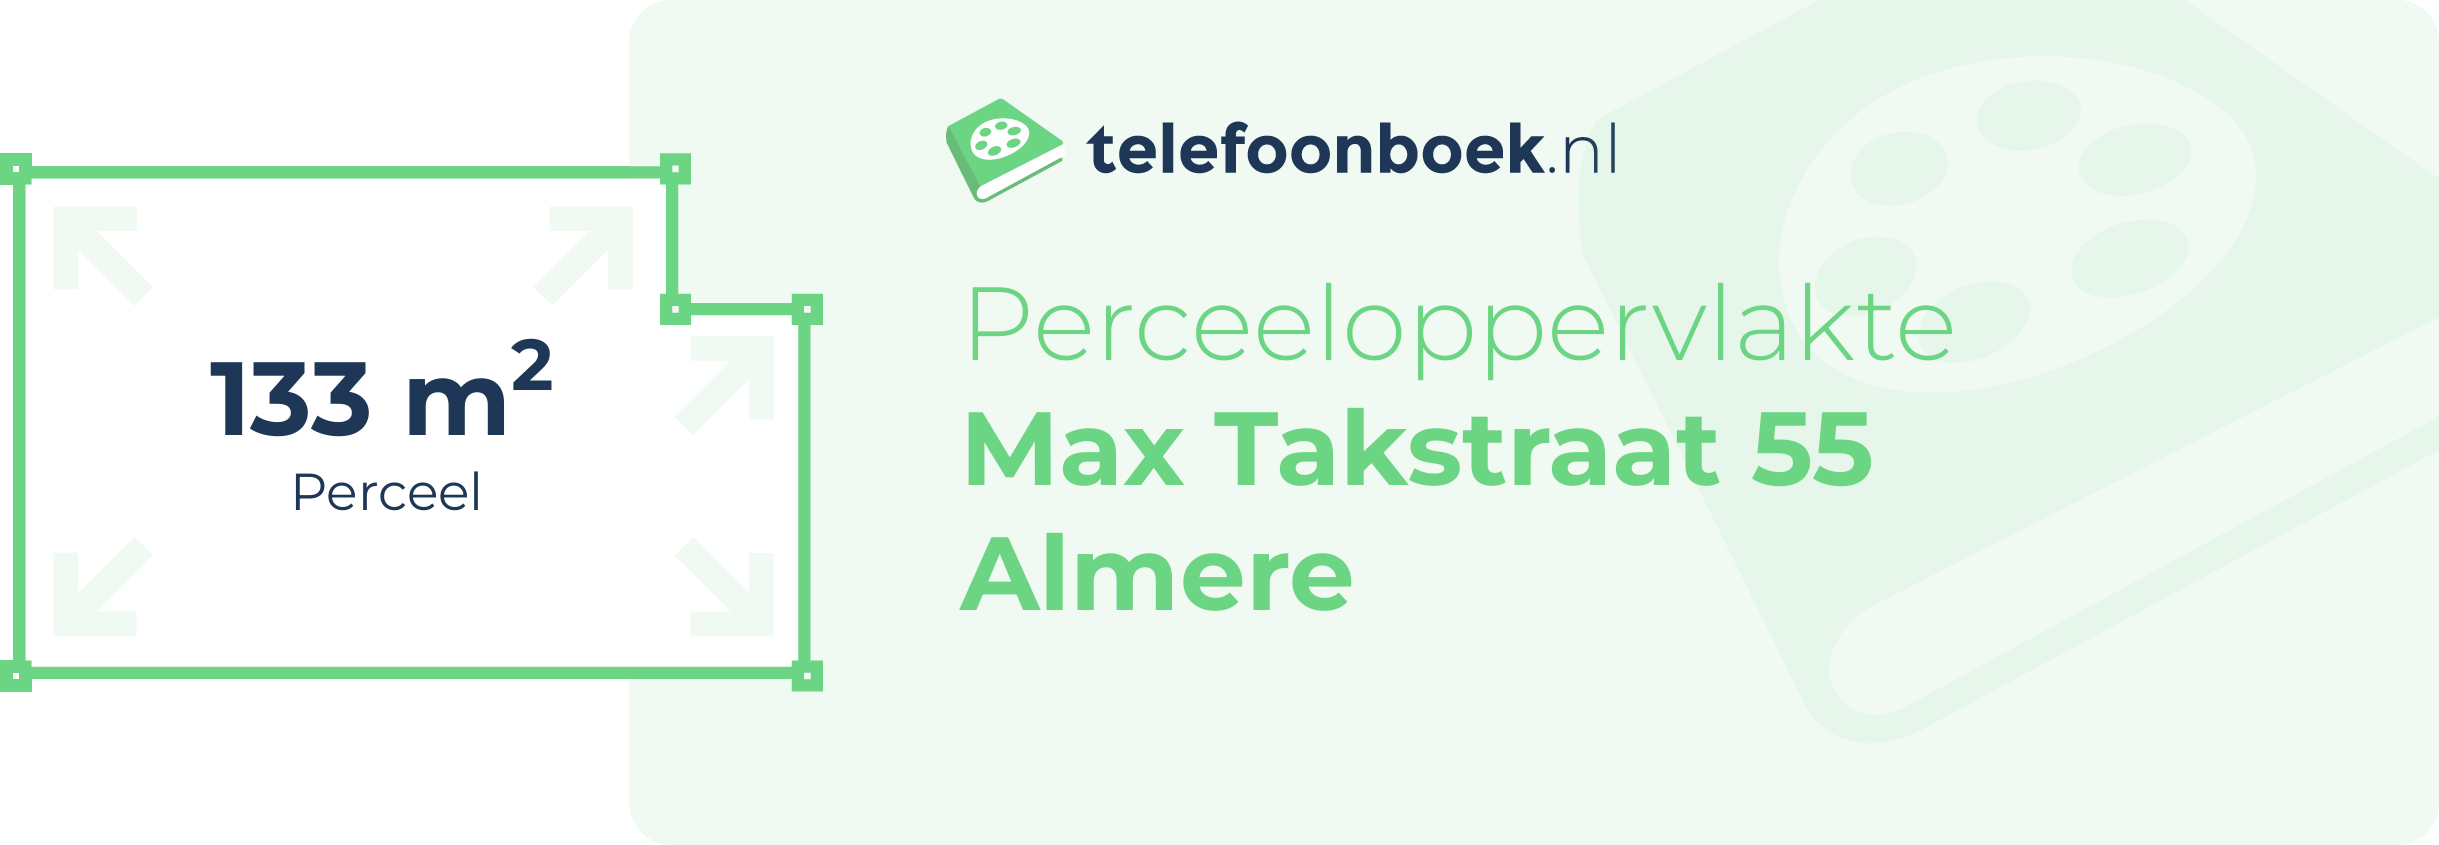 Perceeloppervlakte Max Takstraat 55 Almere